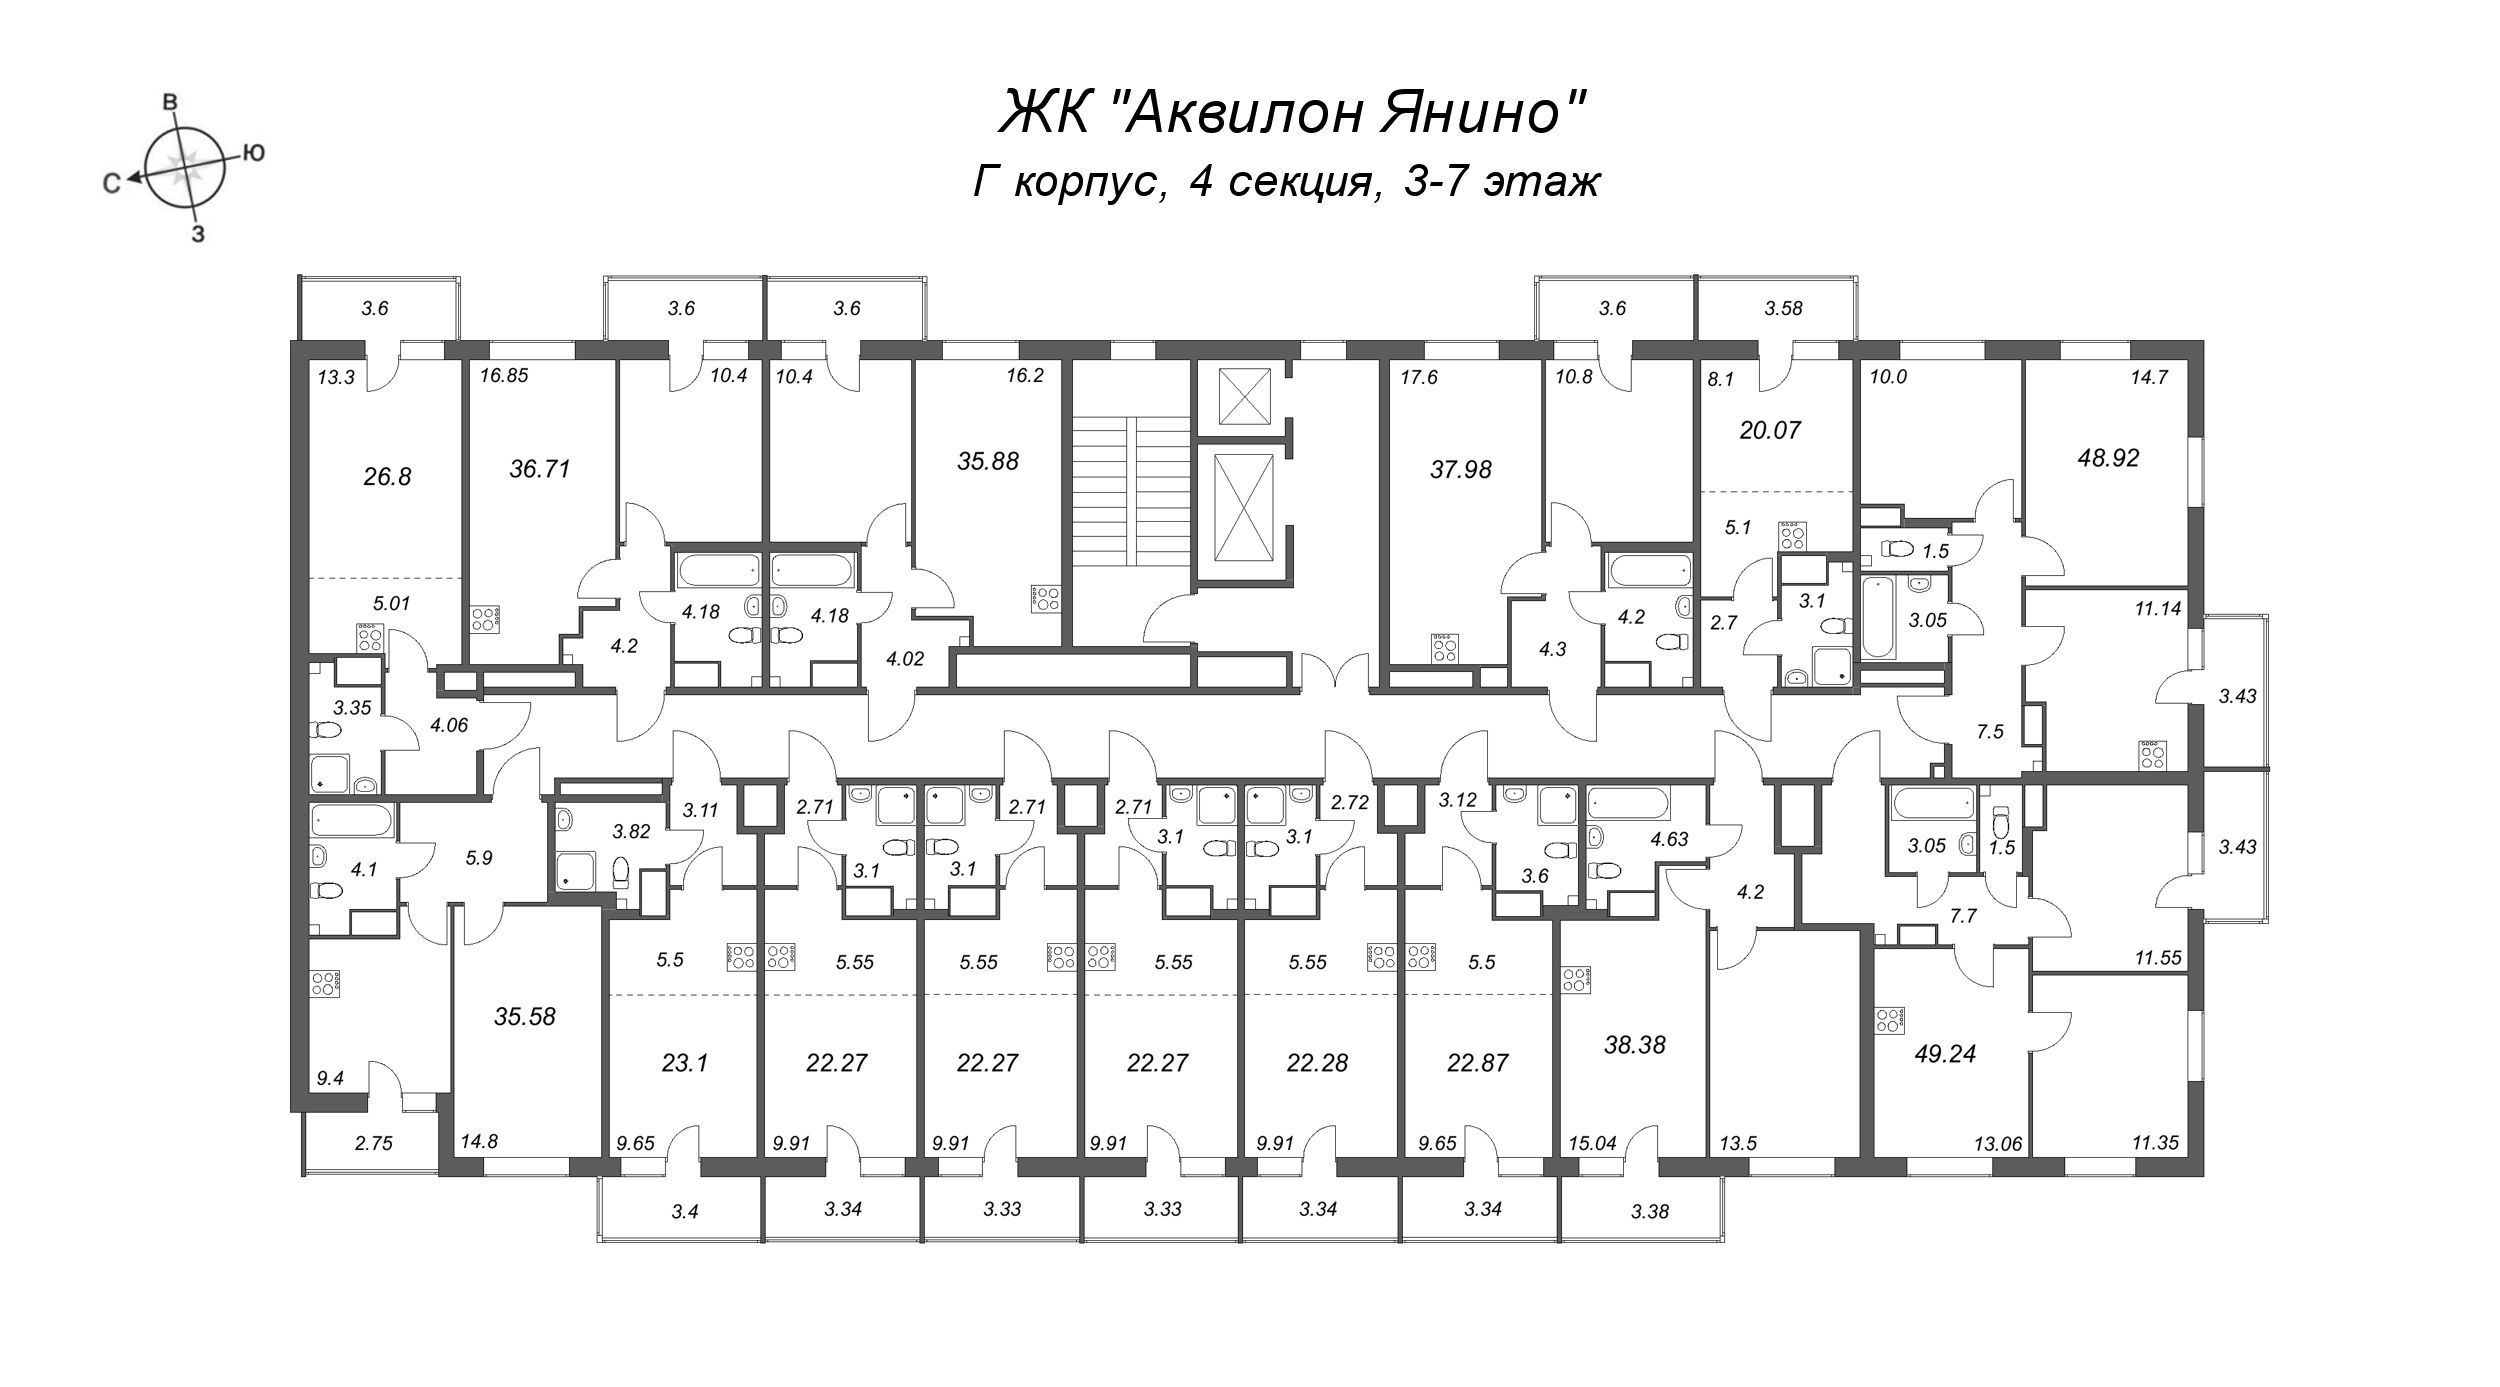 2-комнатная (Евро) квартира, 38.38 м² - планировка этажа